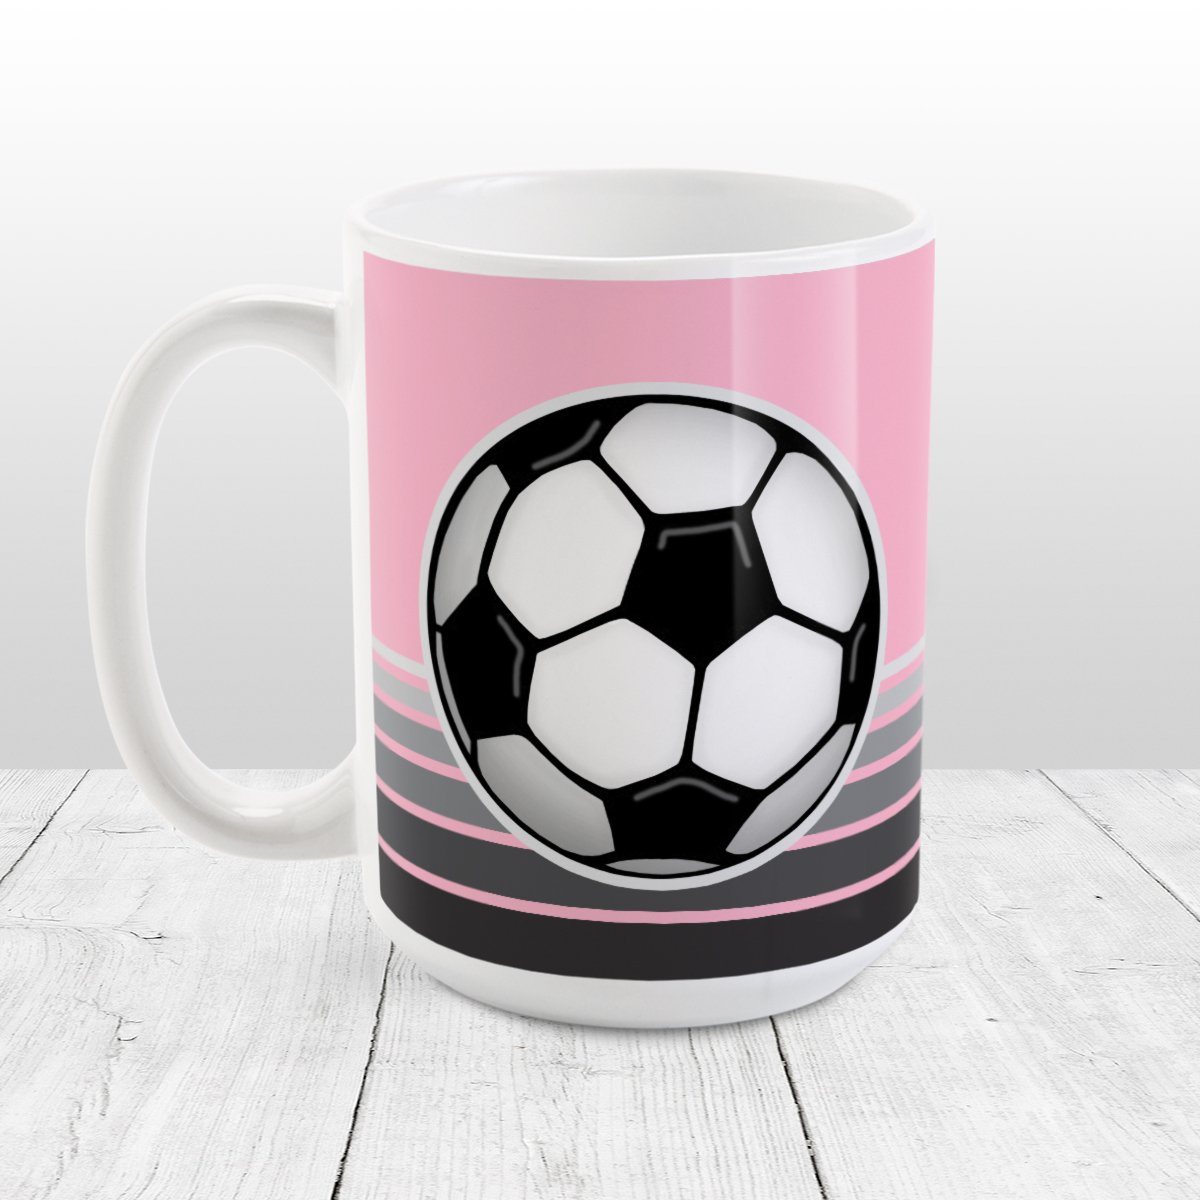 Gray Gradient Lined Pink Soccer Ball Mug at Amy's Coffee Mugs